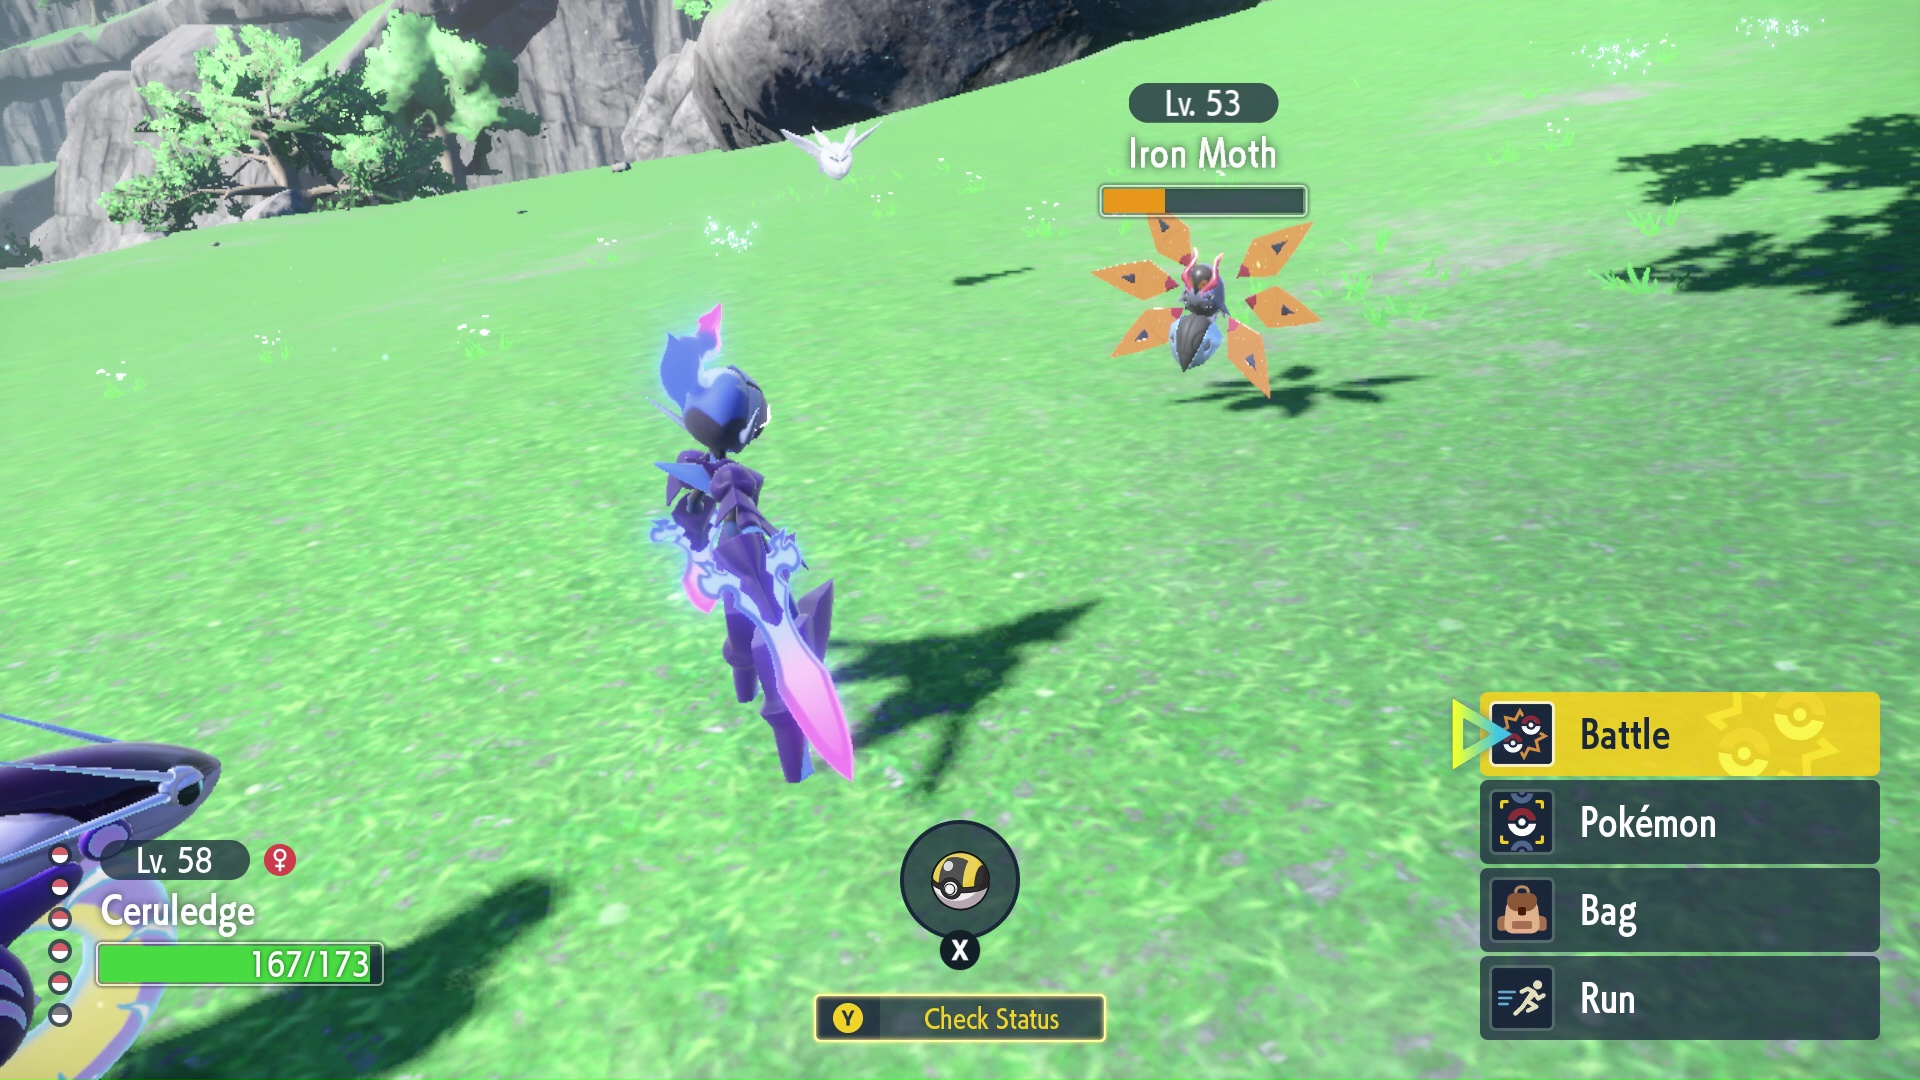 !Iron Moth is a Violet Paradox Pokémon.